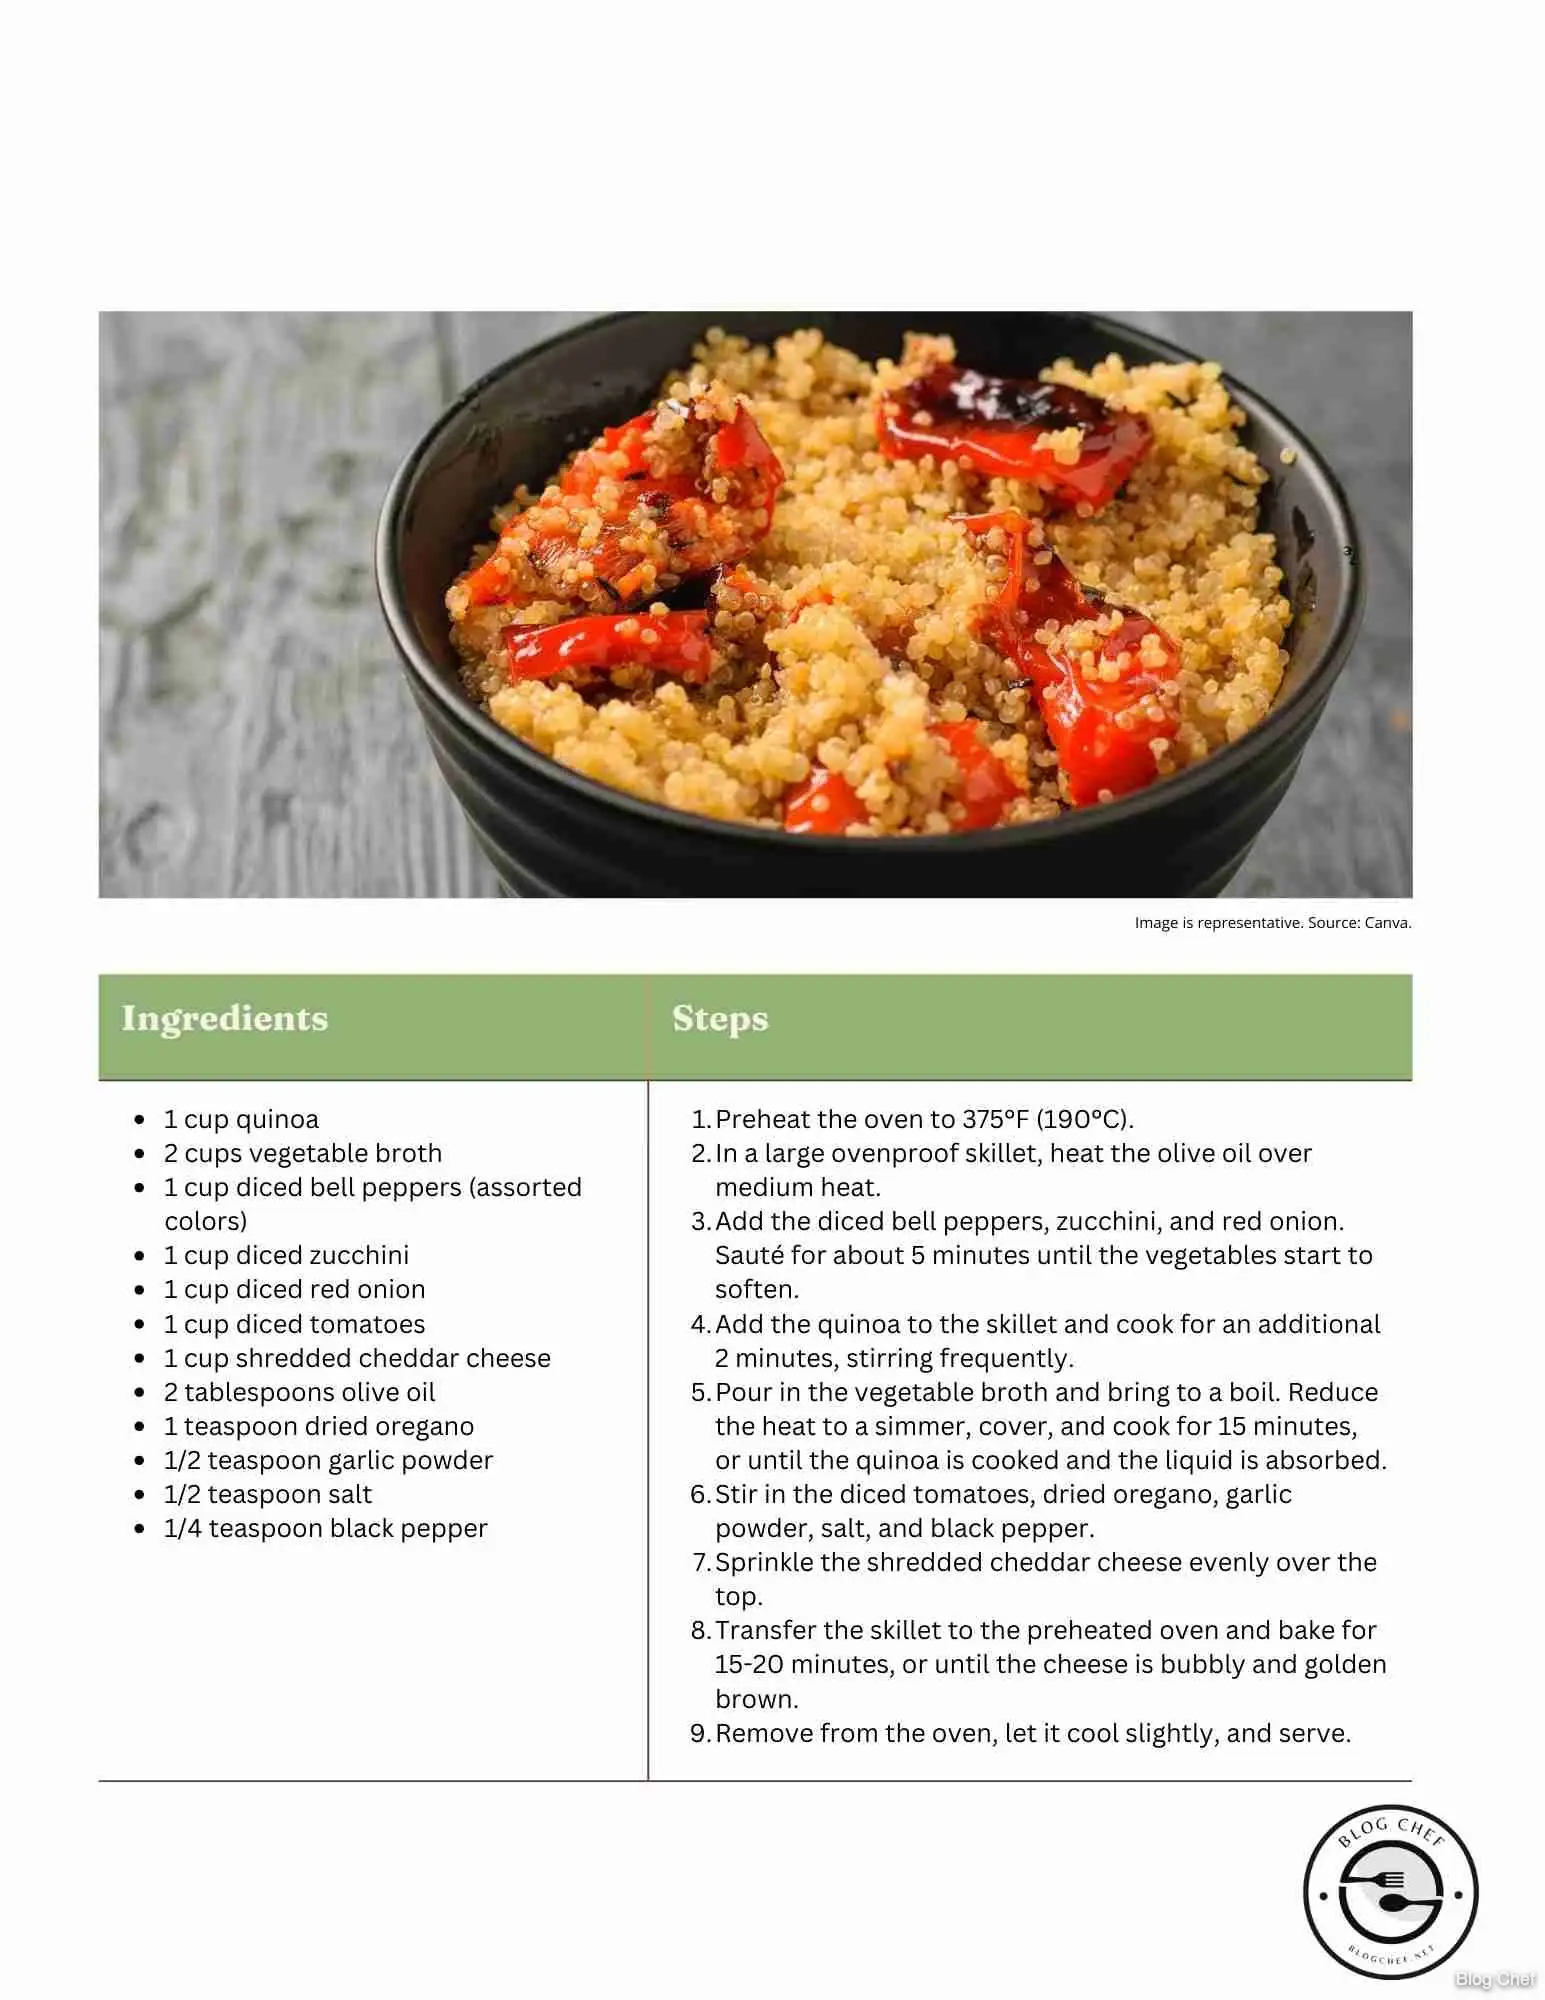 Recipe card for quinoa vegetable bake.